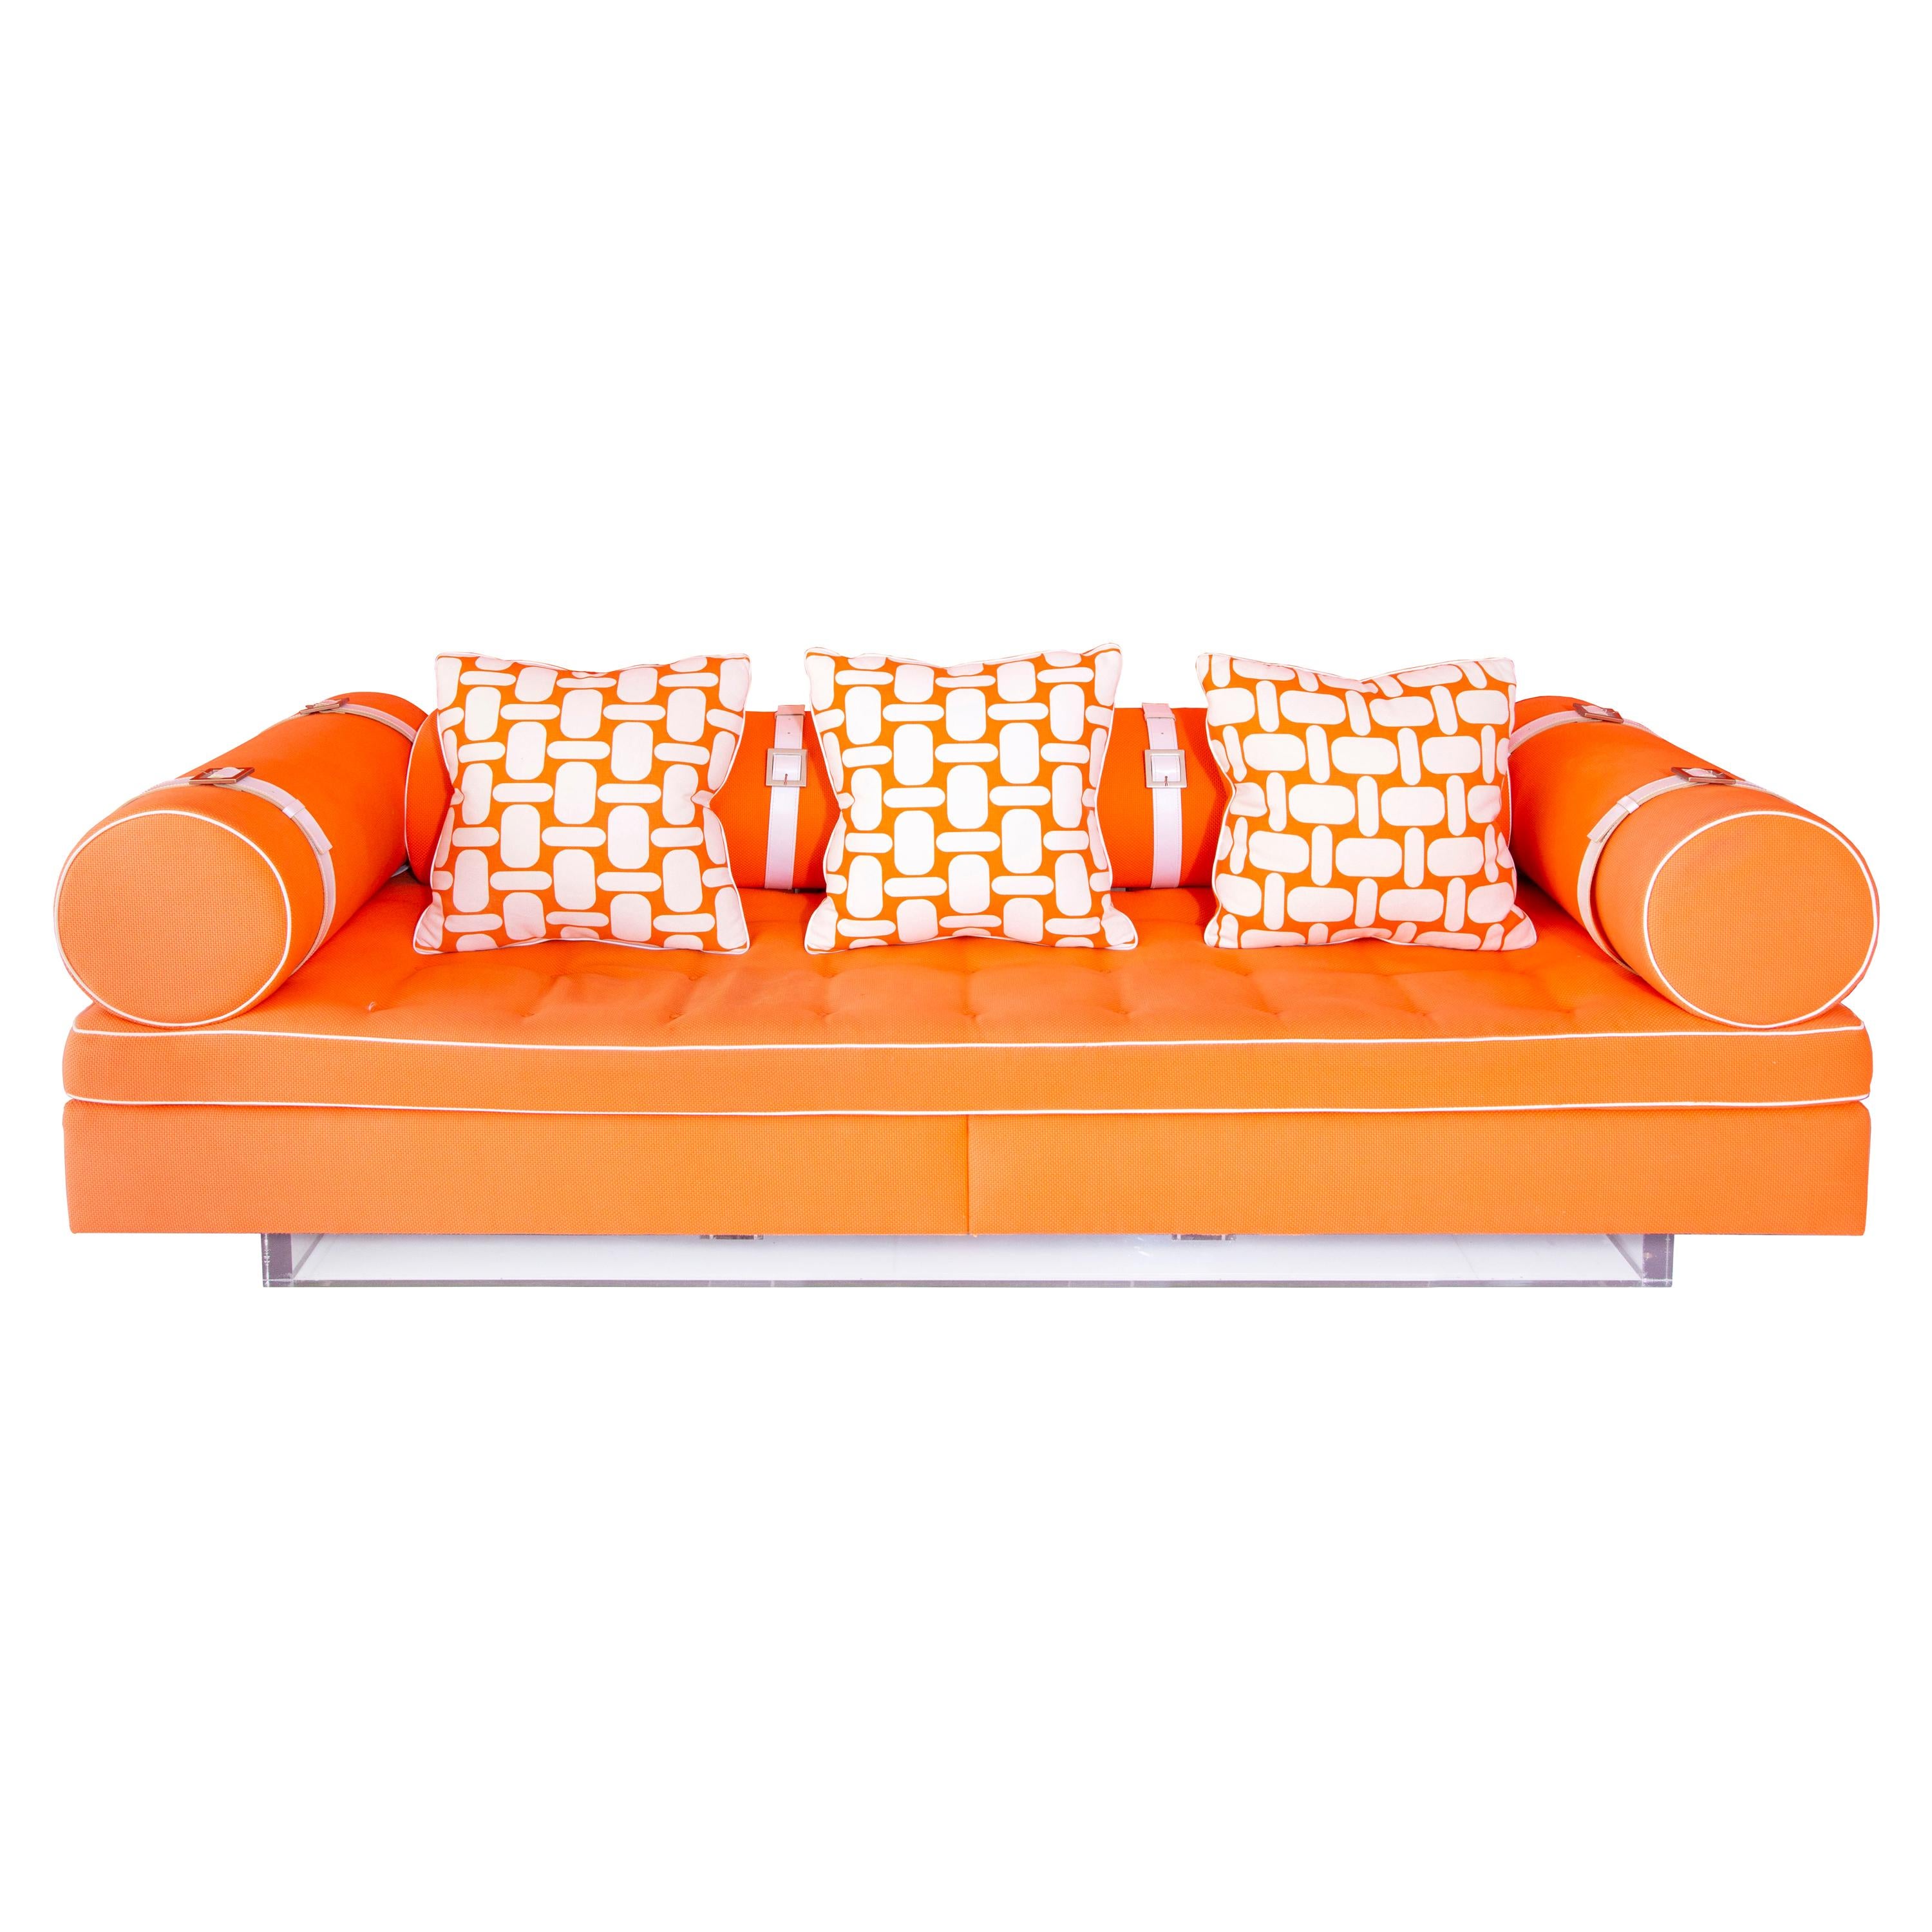 Custom Anthony Baratta Designed Sofa Made by Deangelis Ltd For Sale